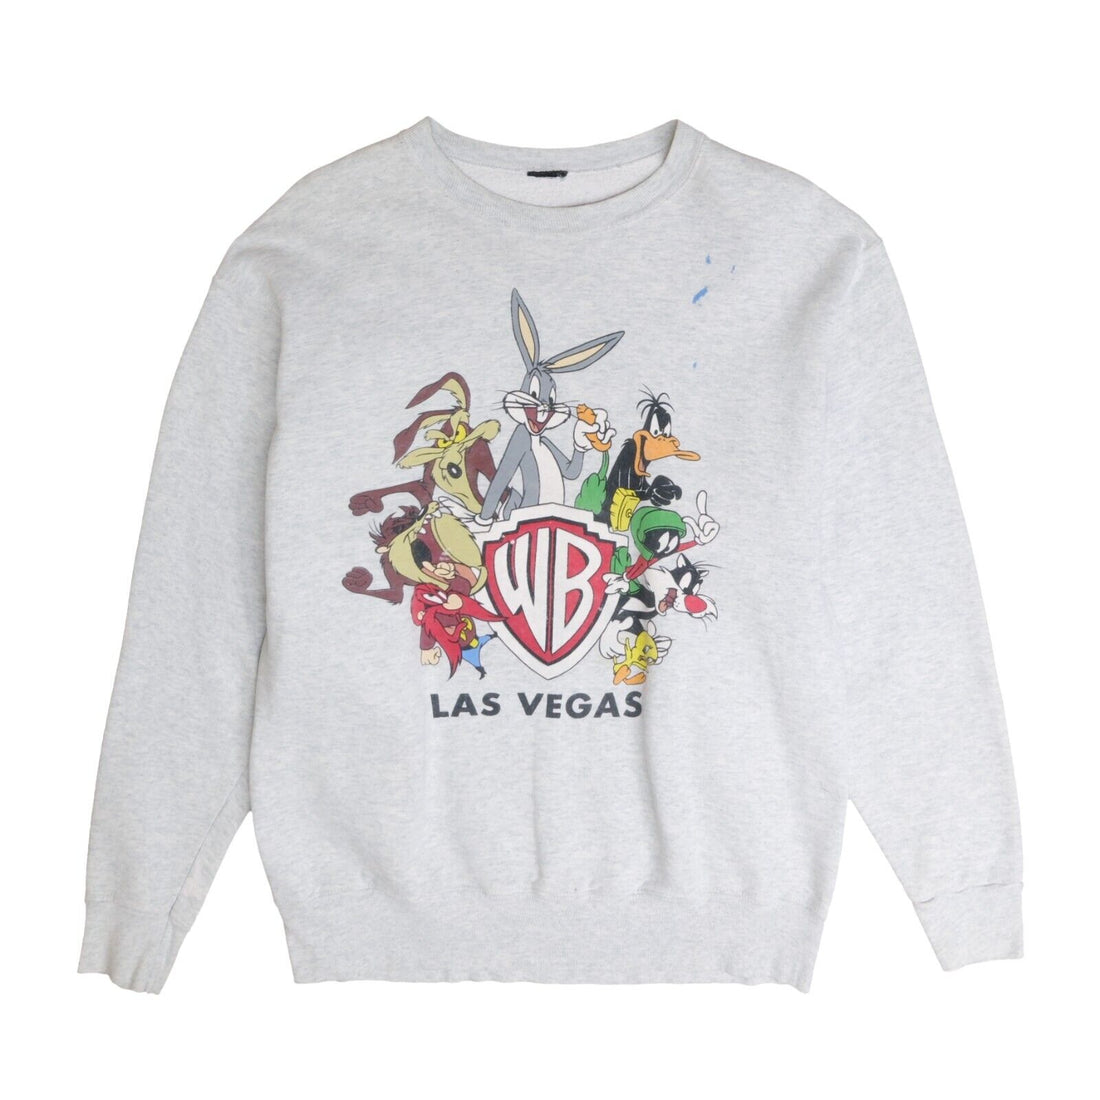 Vintage Looney Tunes Las Vegas Sweatshirt Crewneck Size Medium Warner Brothers